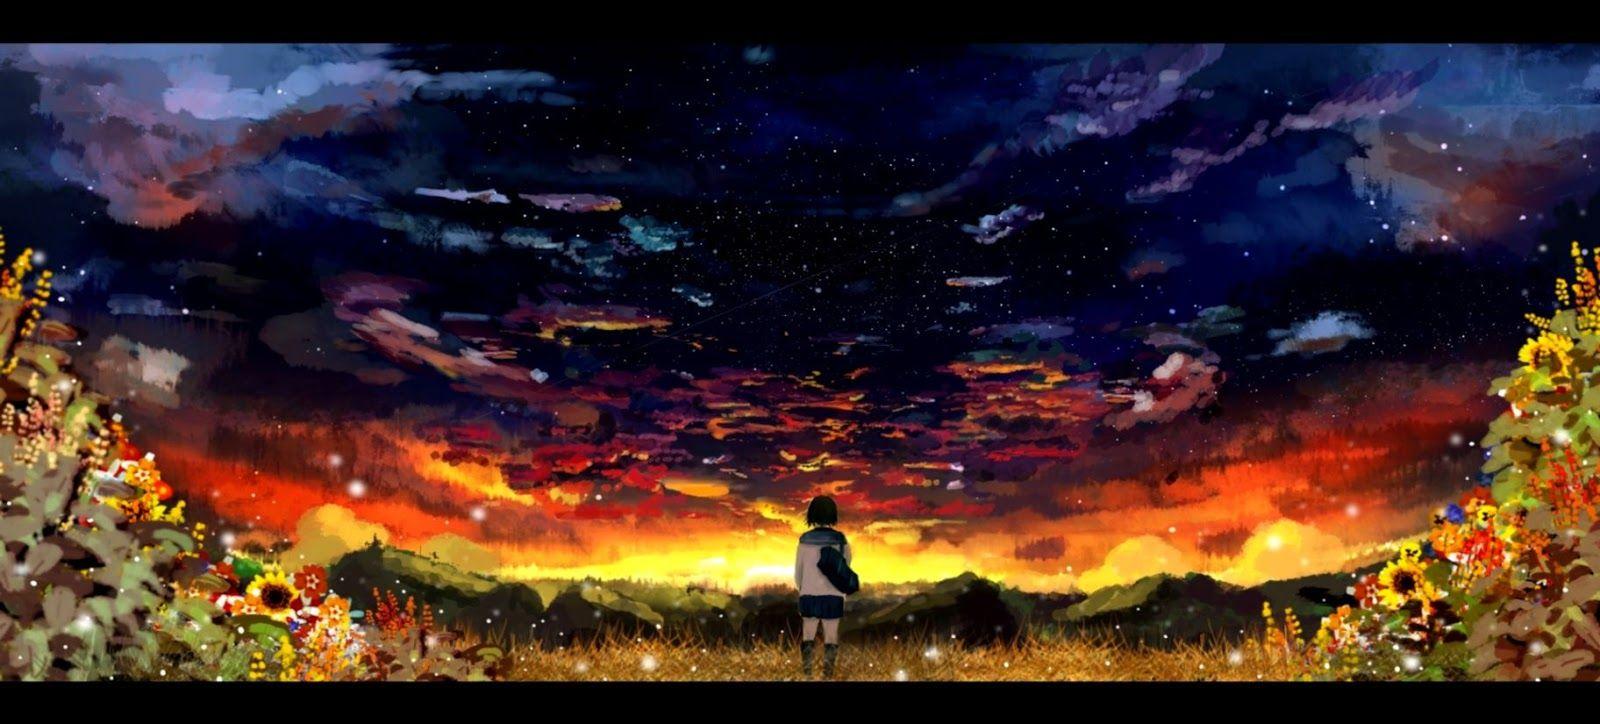 Naruto Landscape HD Wallpapers - Top Free Naruto Landscape HD